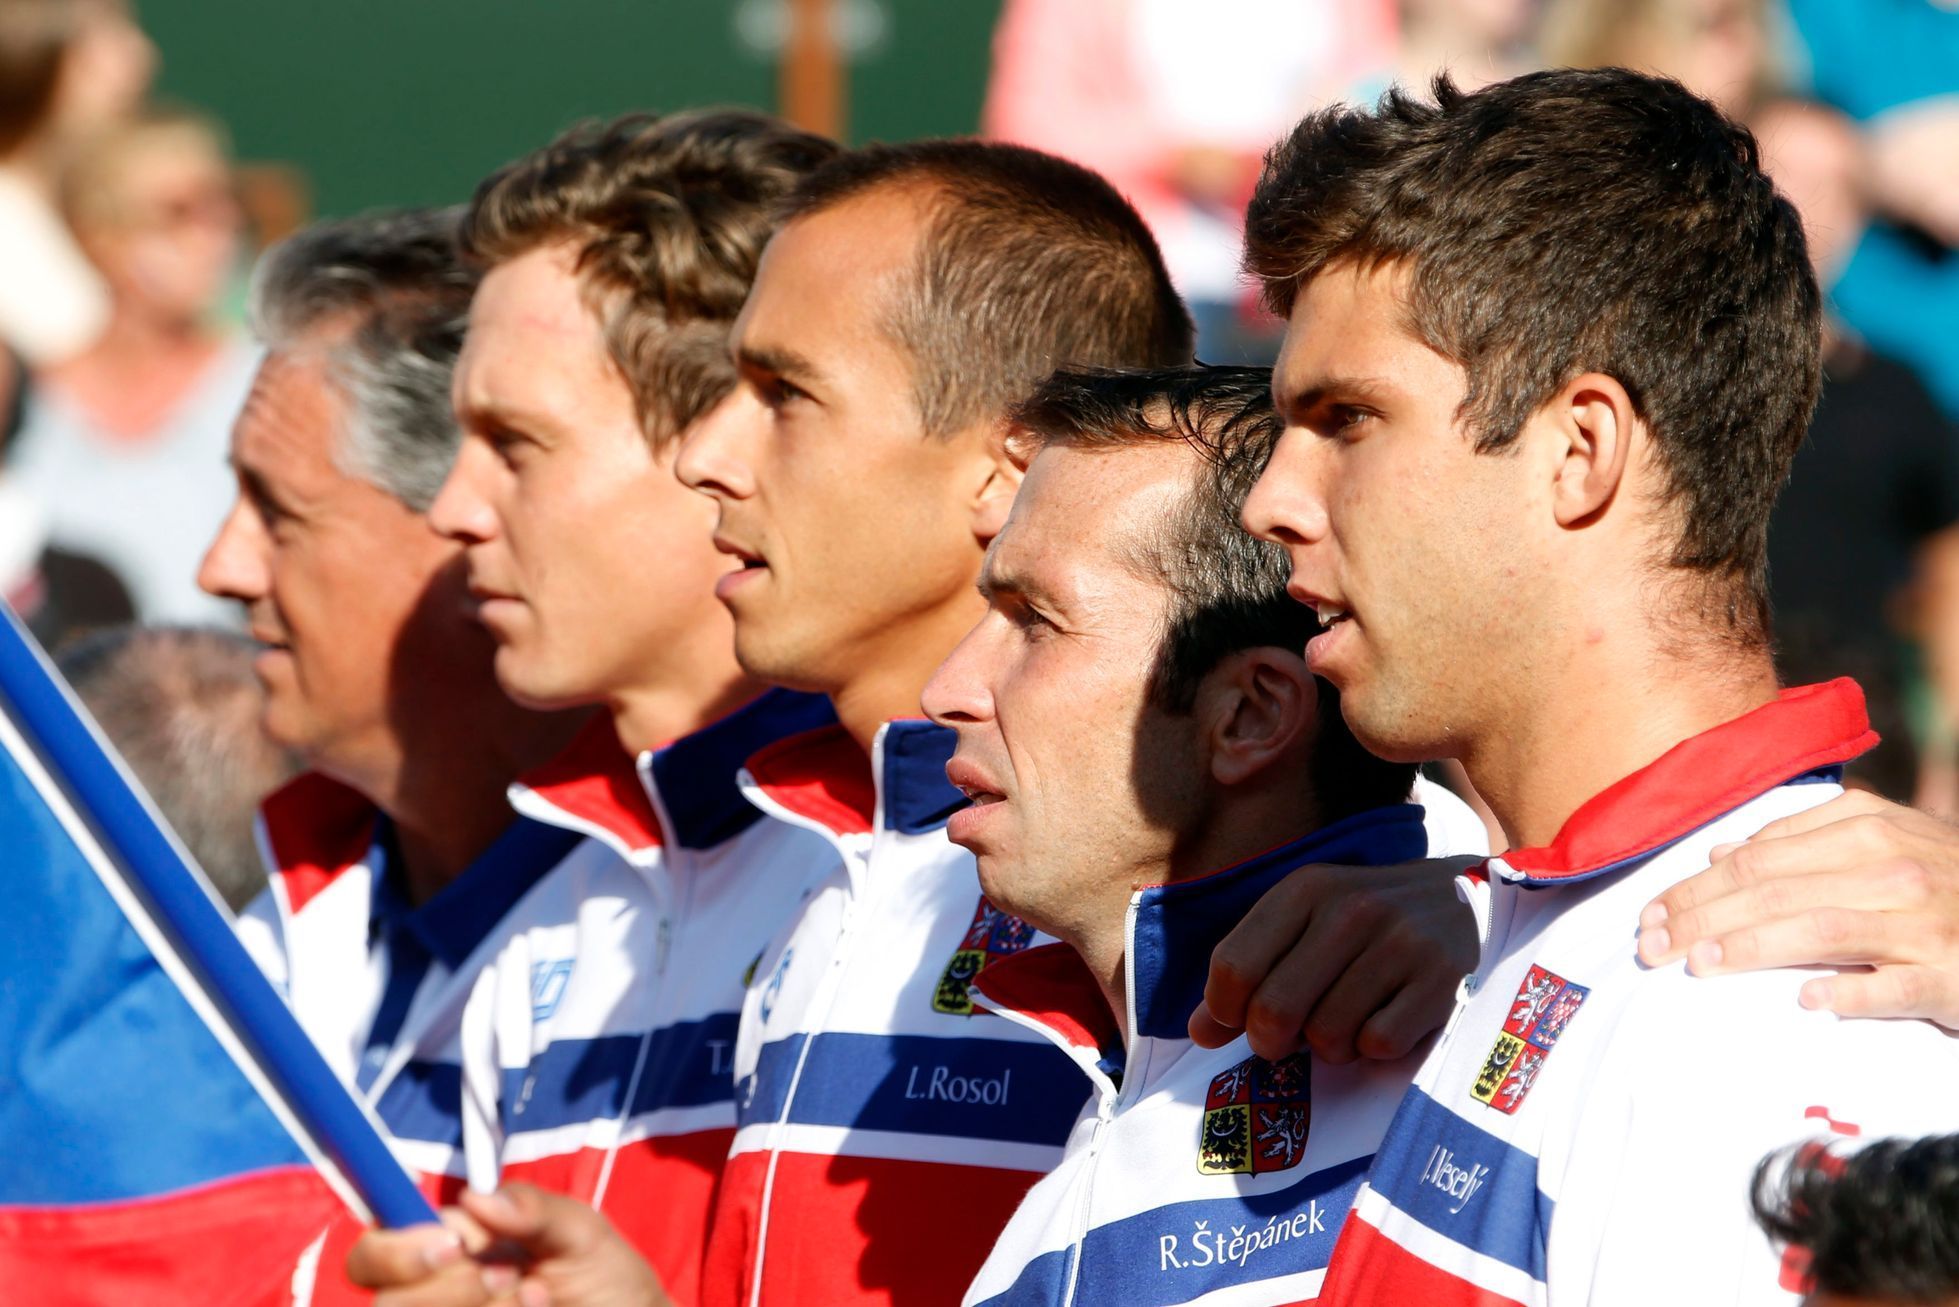 Český daviscupový tým zpívá hymnu v semifinále Davis Cupu 2014